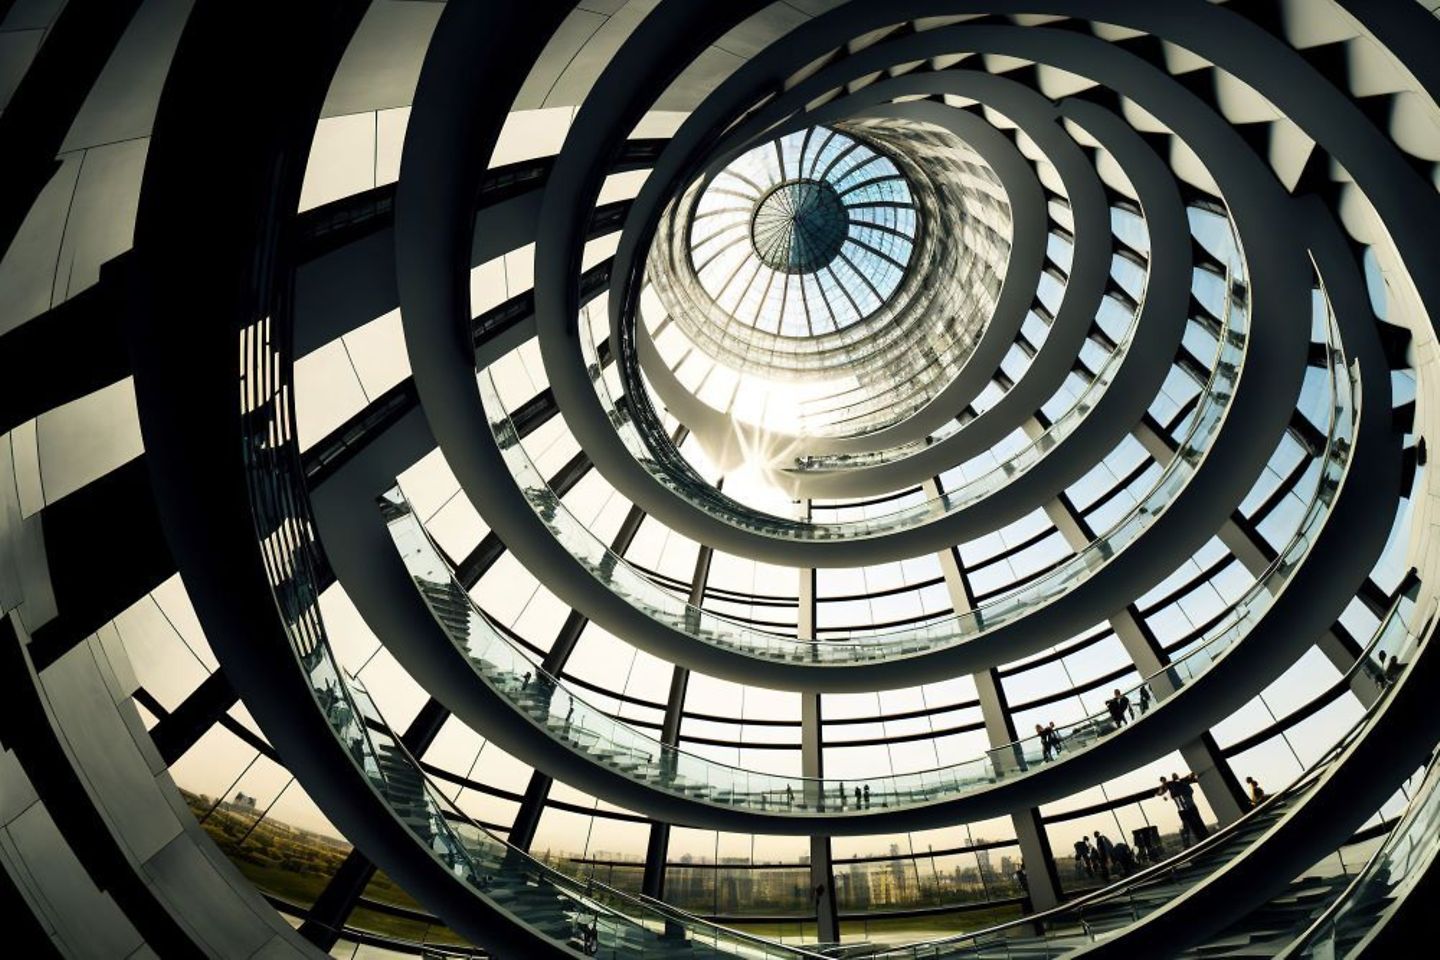 Moderna cúpula en espiral dentro de un edificio de cristal y metal; escalera de caracol.